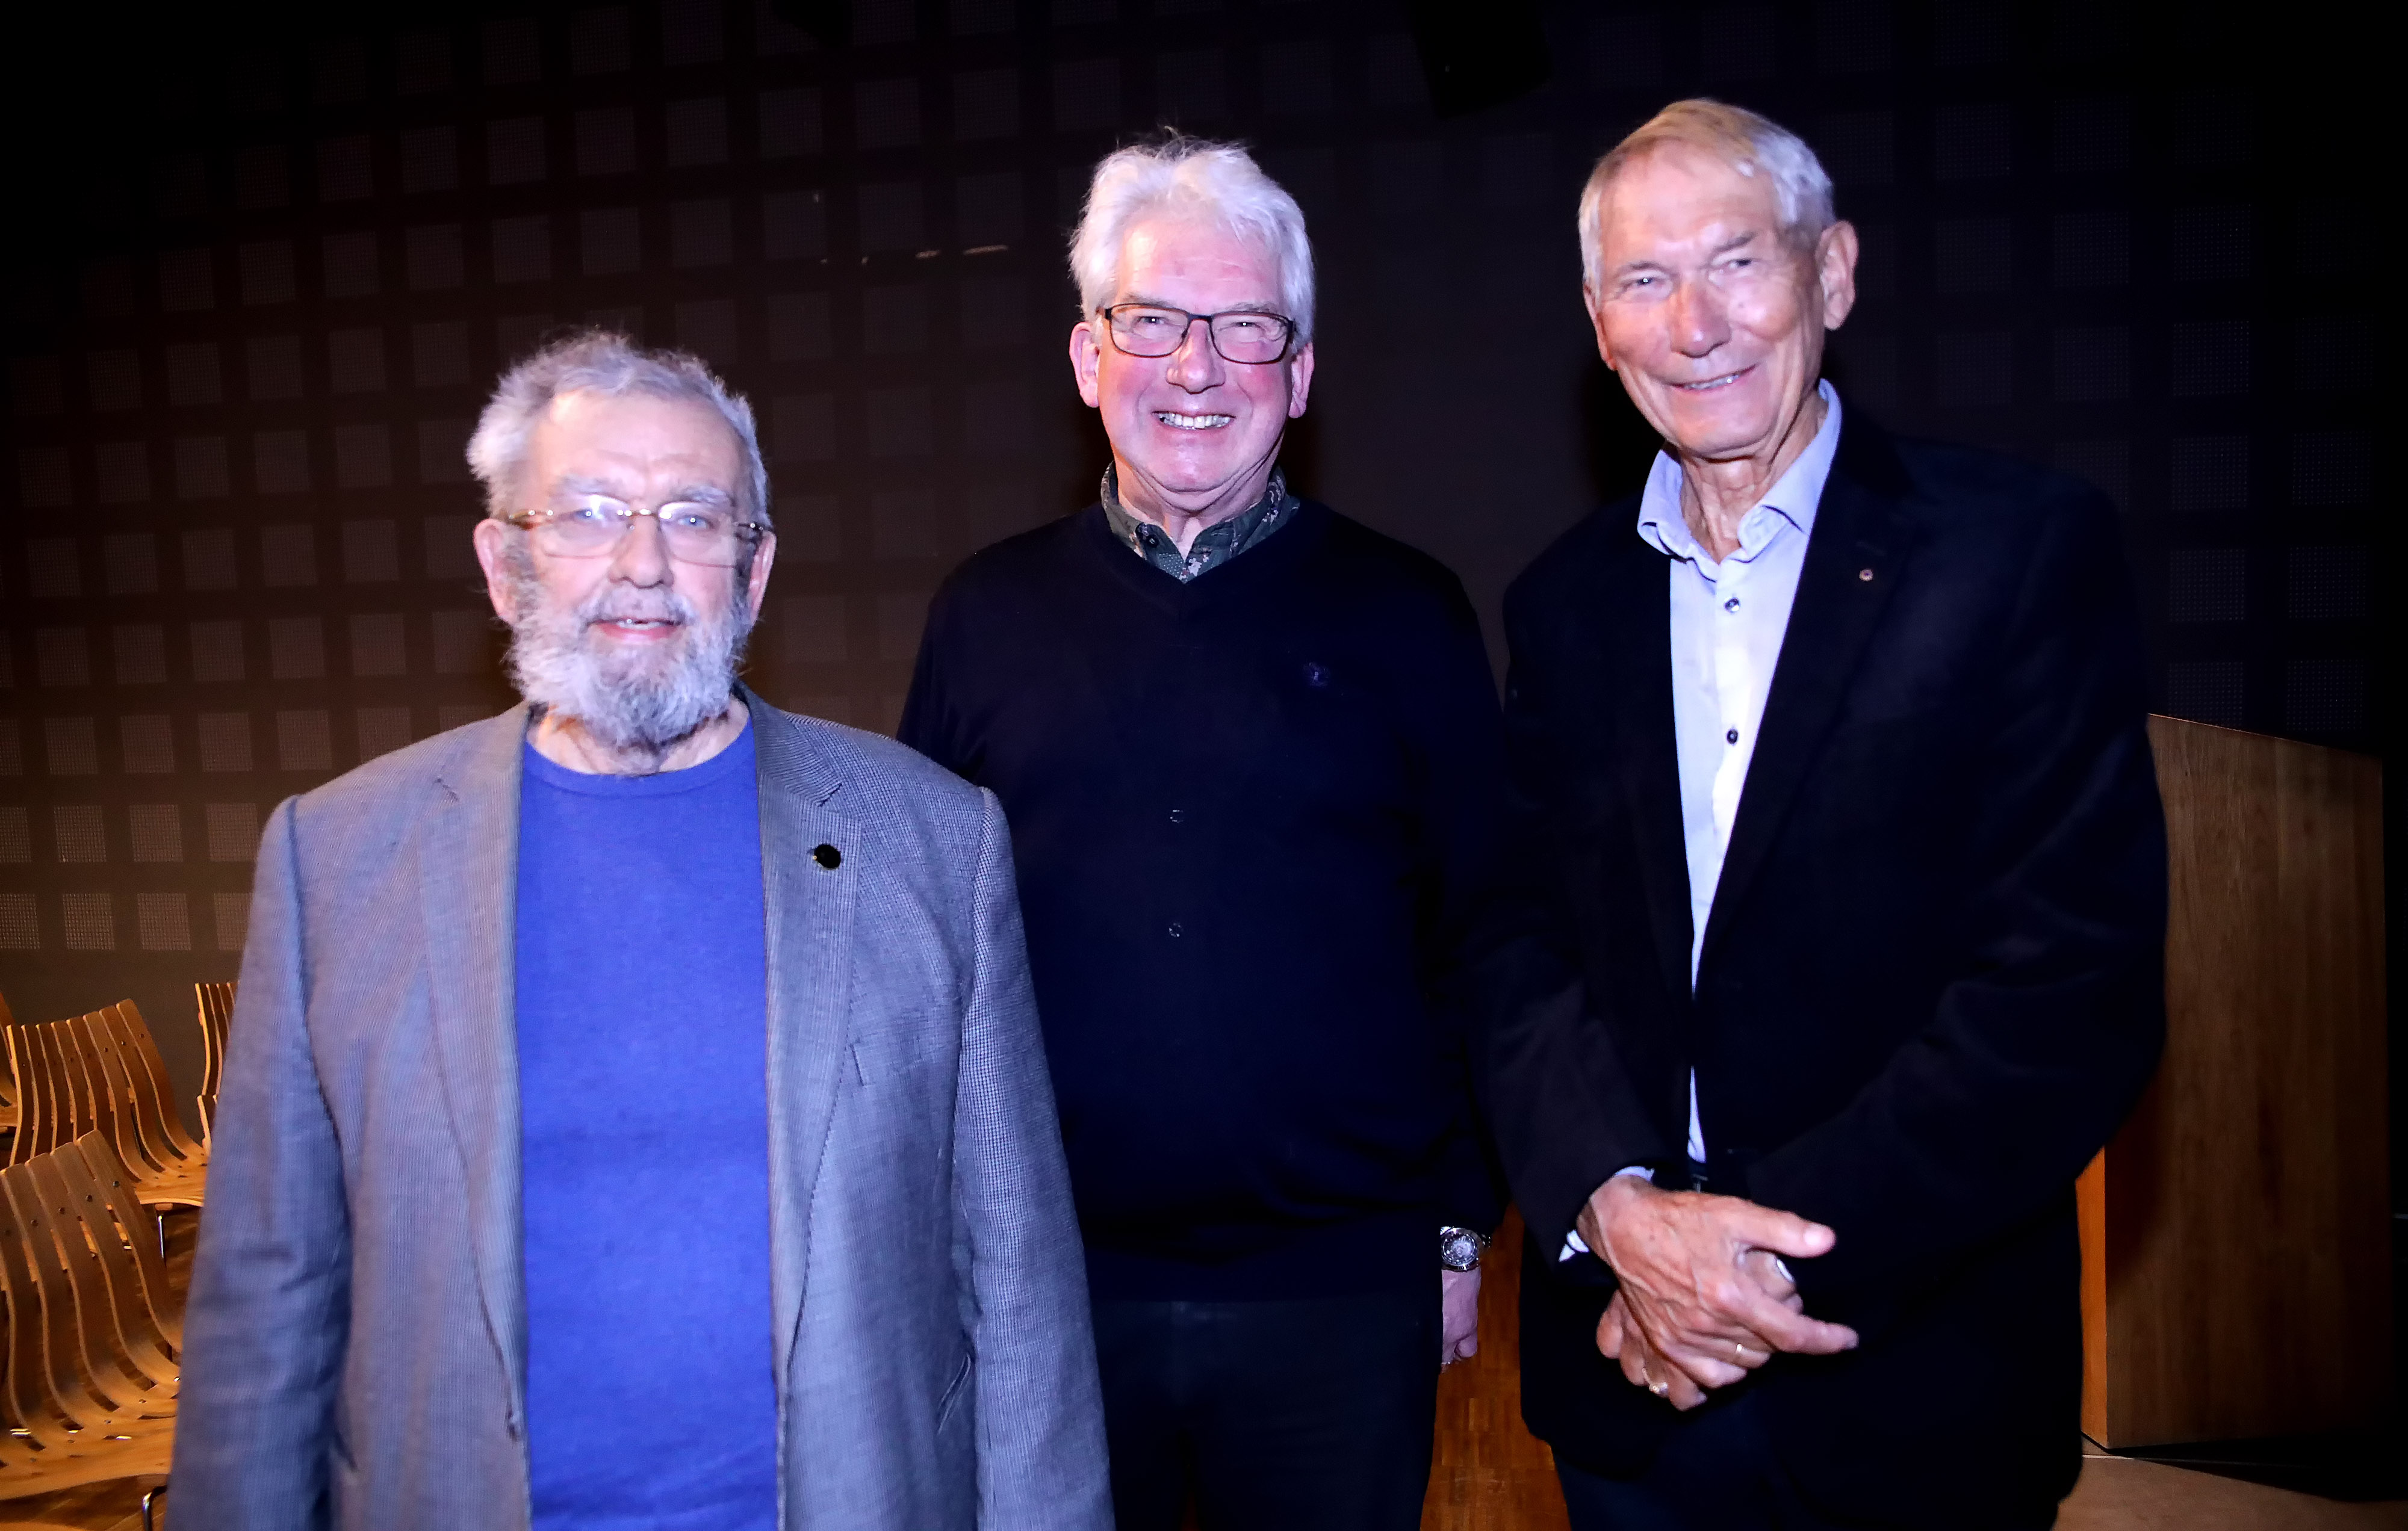 På bildet ser vi fra venstre: Gunnar Gravdal Nerhus, Rolf Anker Thon og Roald Haugen